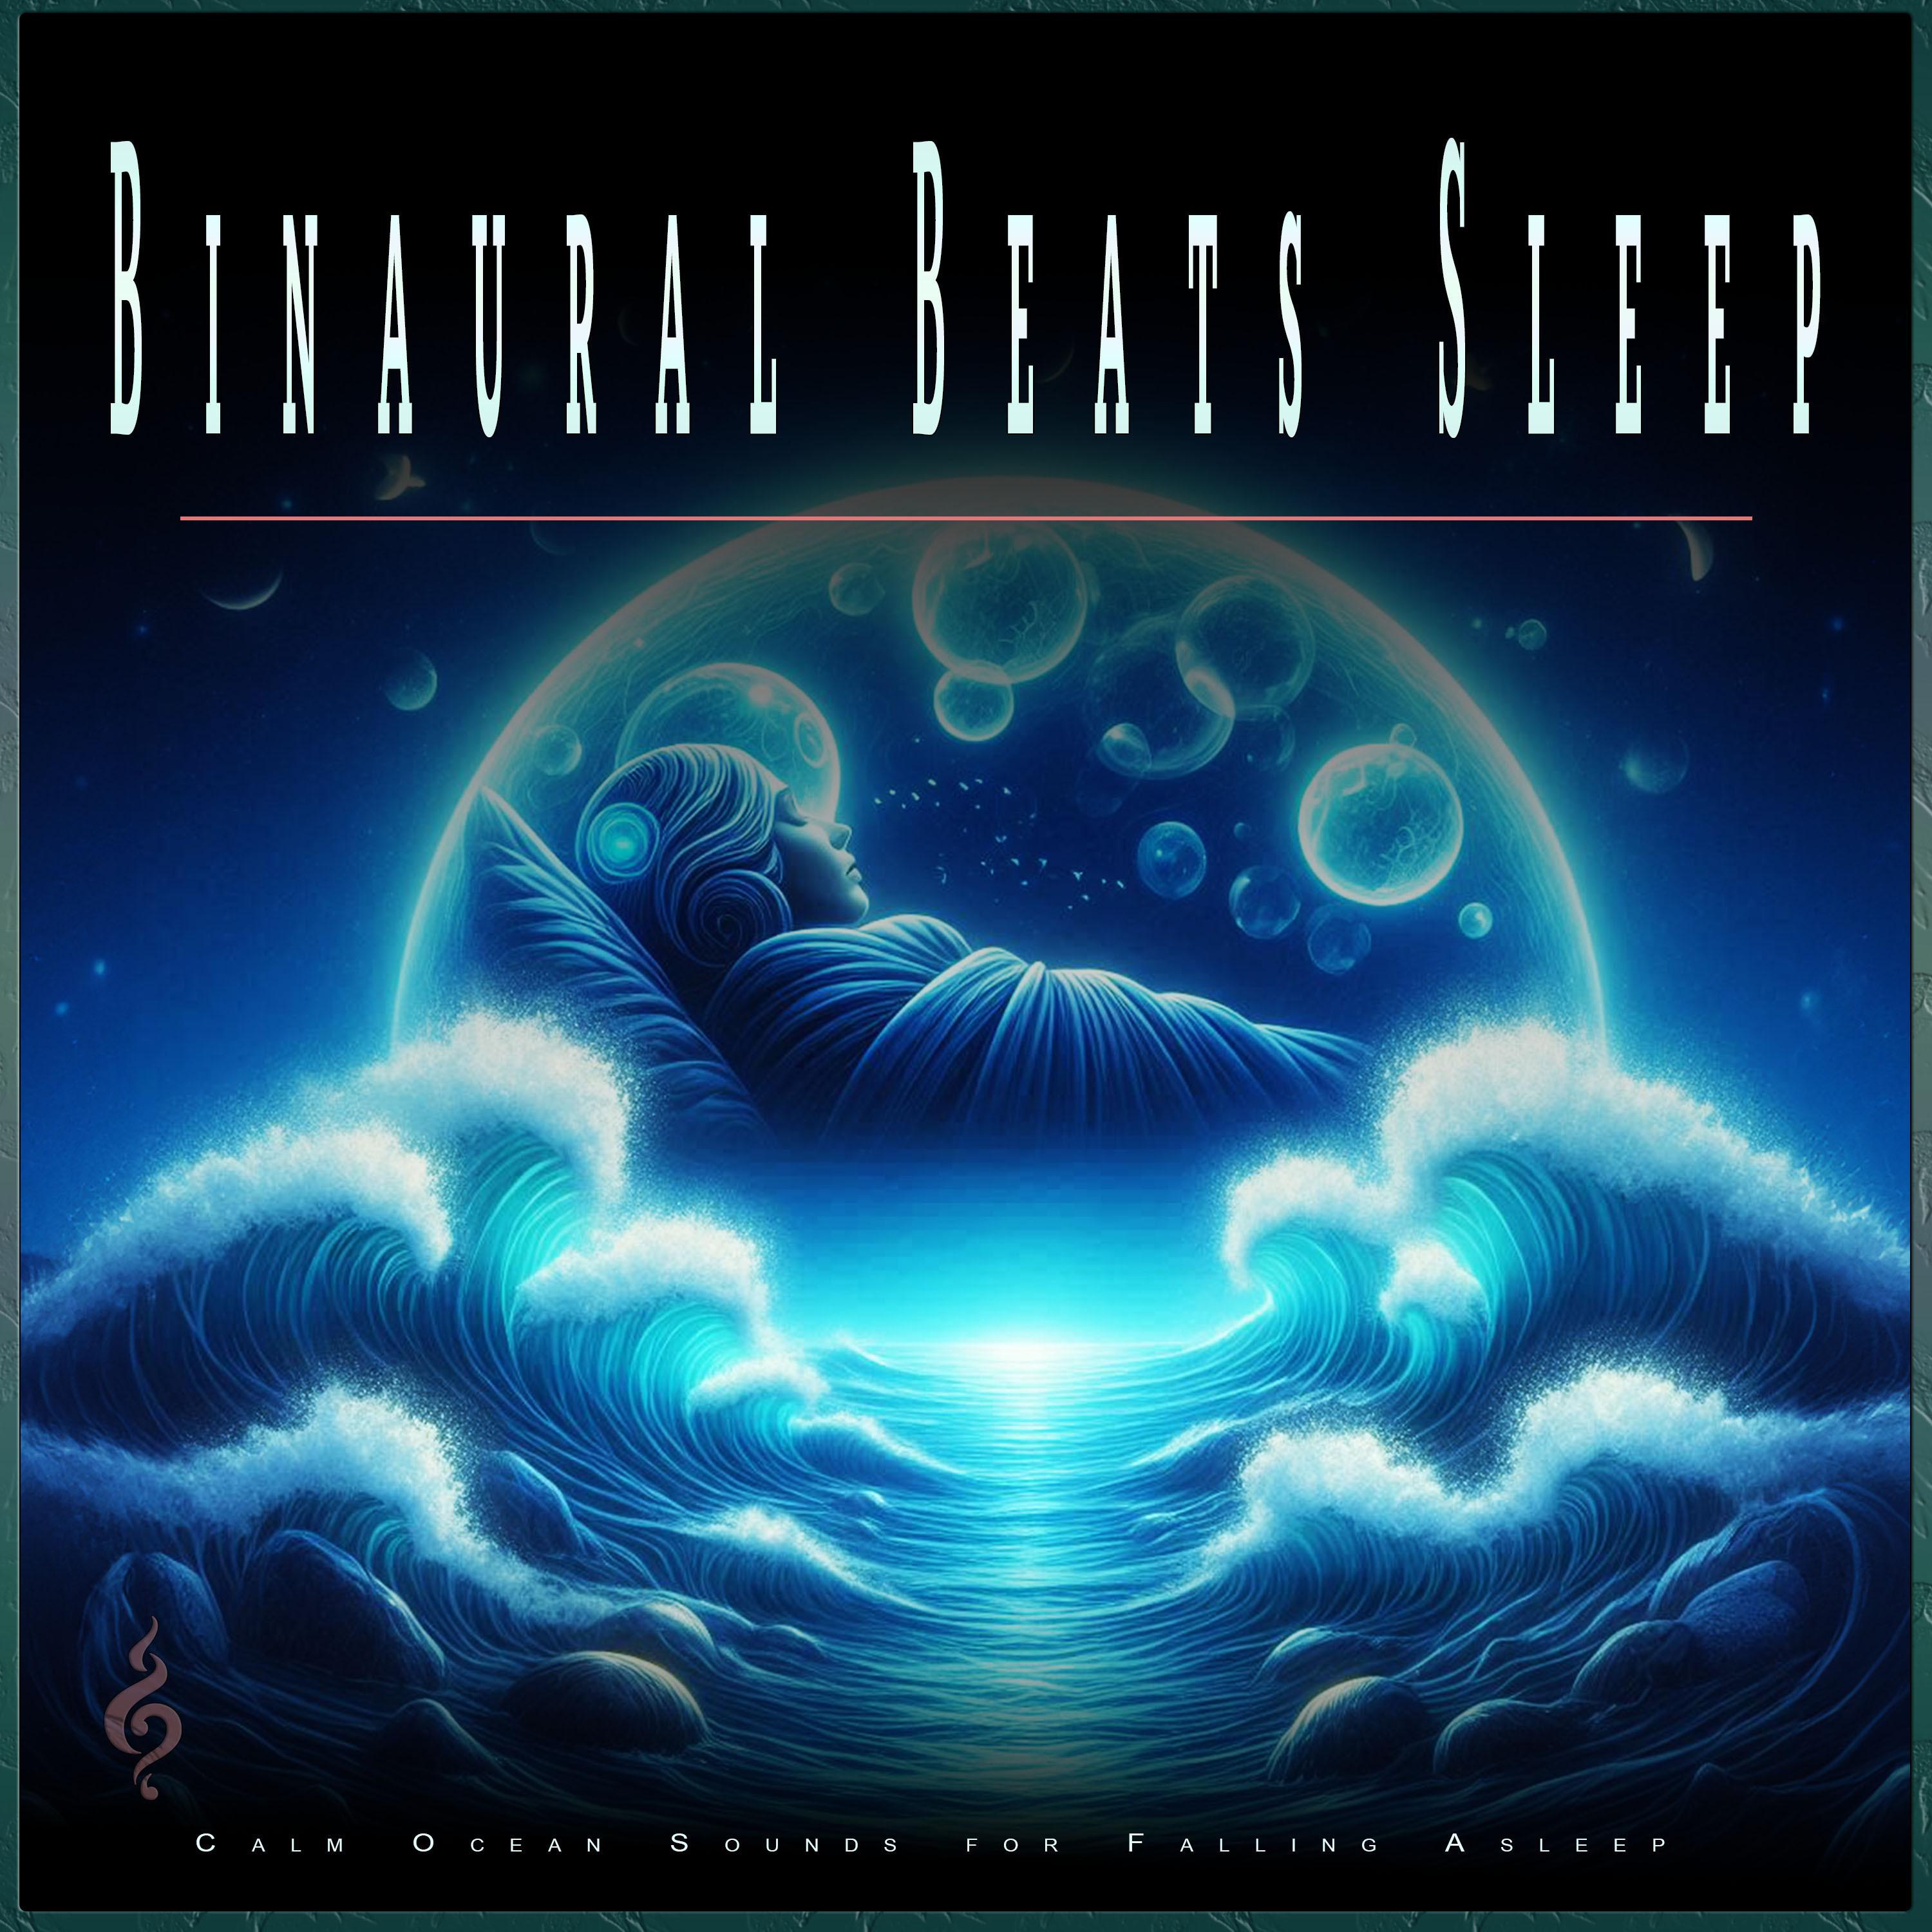 Ambient Sleeping Music - Binaural Beats Relaxation